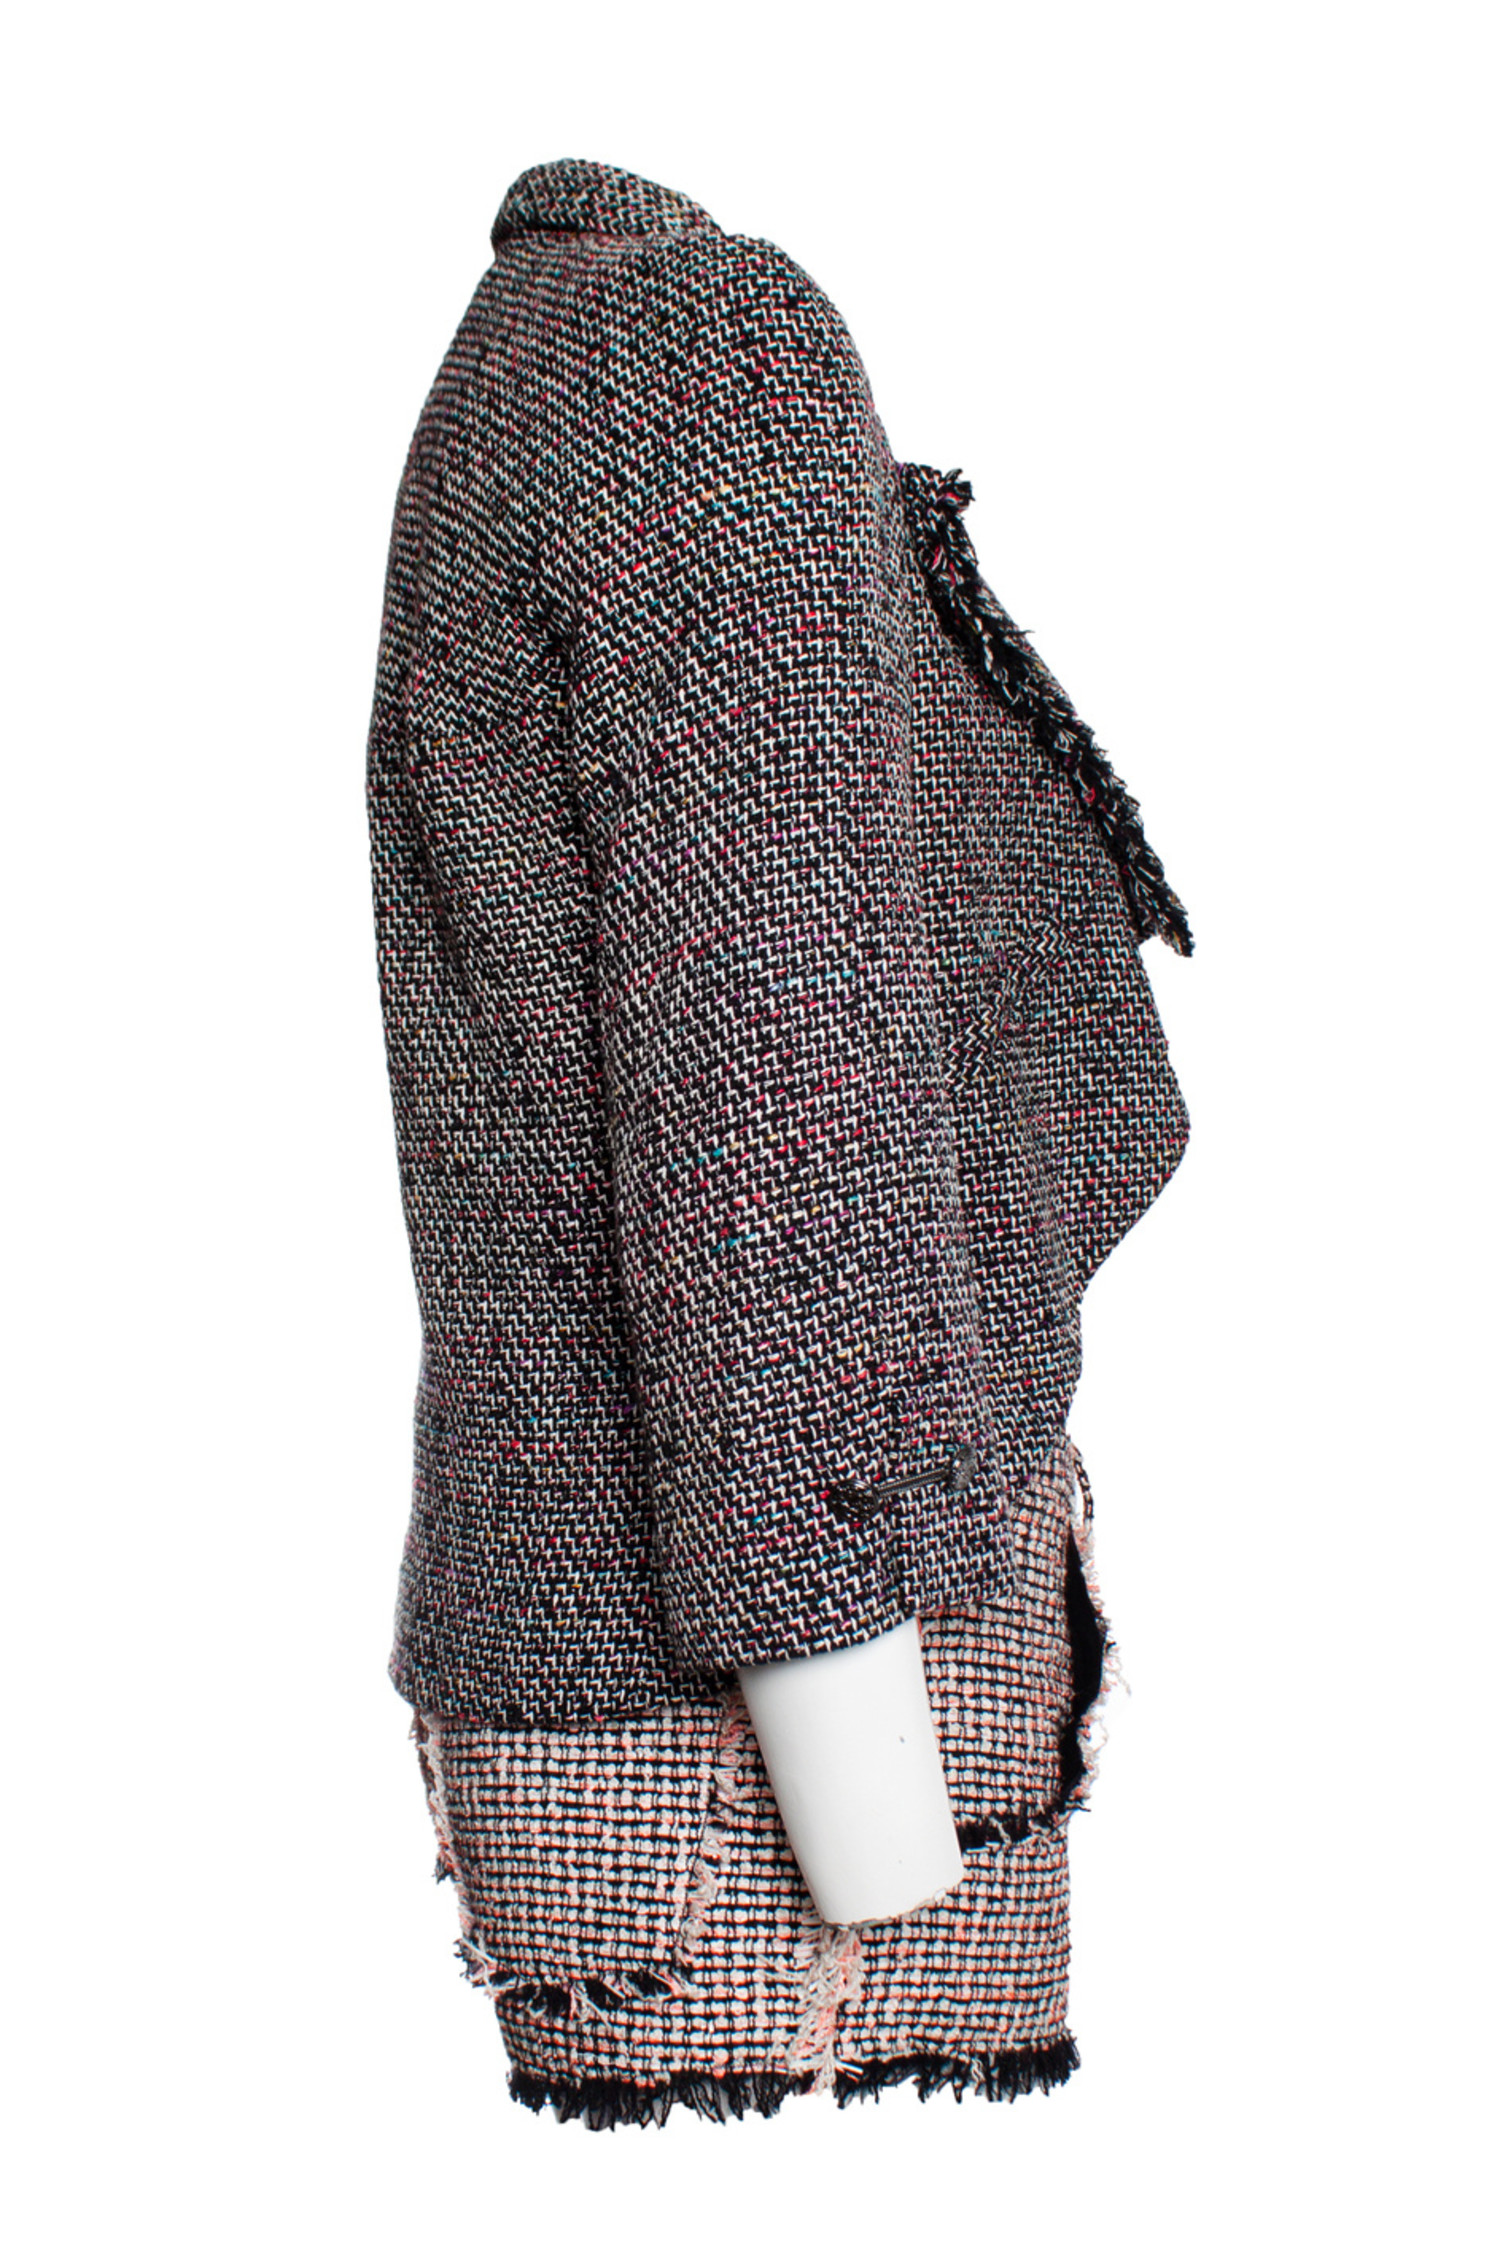 Vintage Chanel 1997A Chevron Tweed Jacket  Skirt Set  Recess